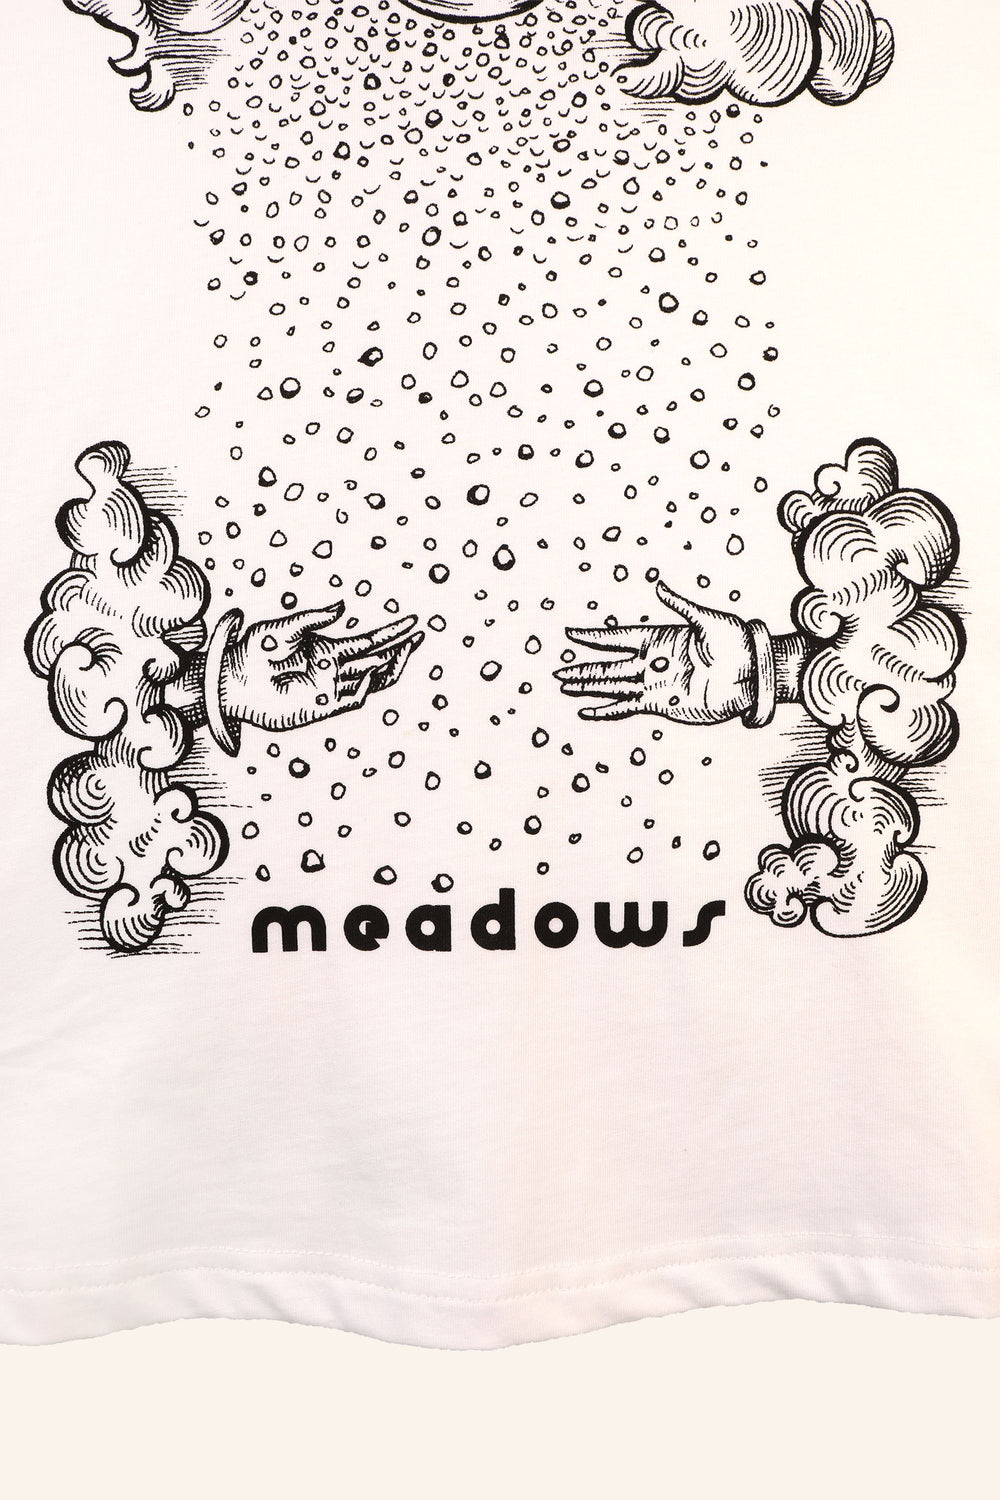 Meadows - Cloud T-Shirt